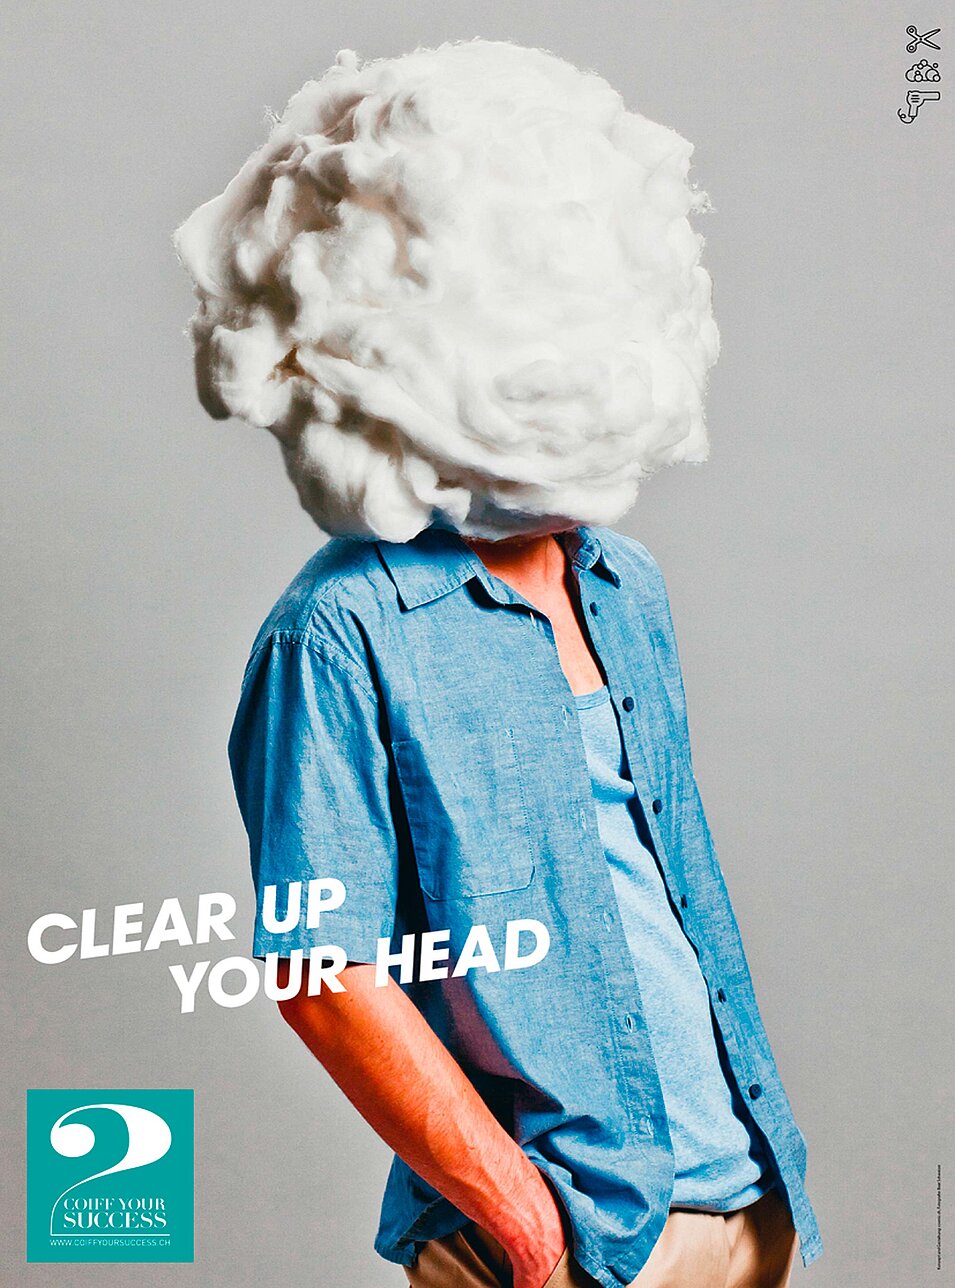  cotton wool on head advertising bern